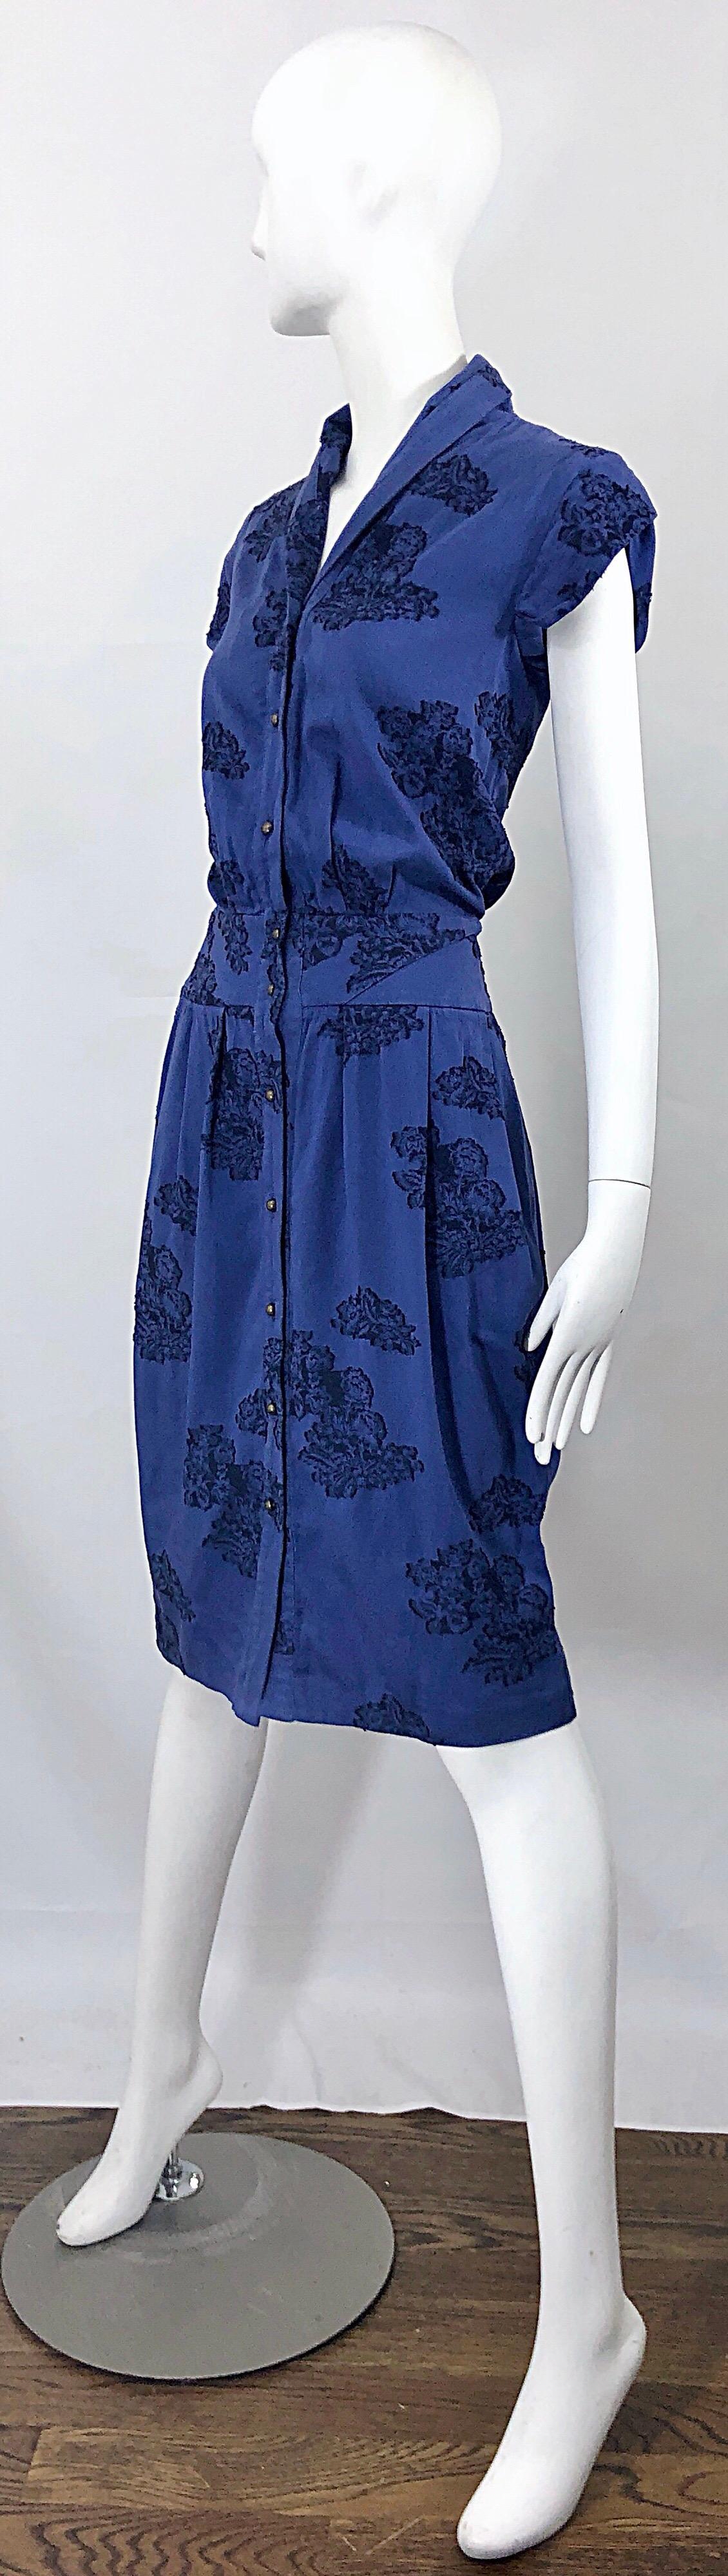 Alexander McQueen Blue + Black Lace Print Size 40 1950s Style Bustle Dress 8